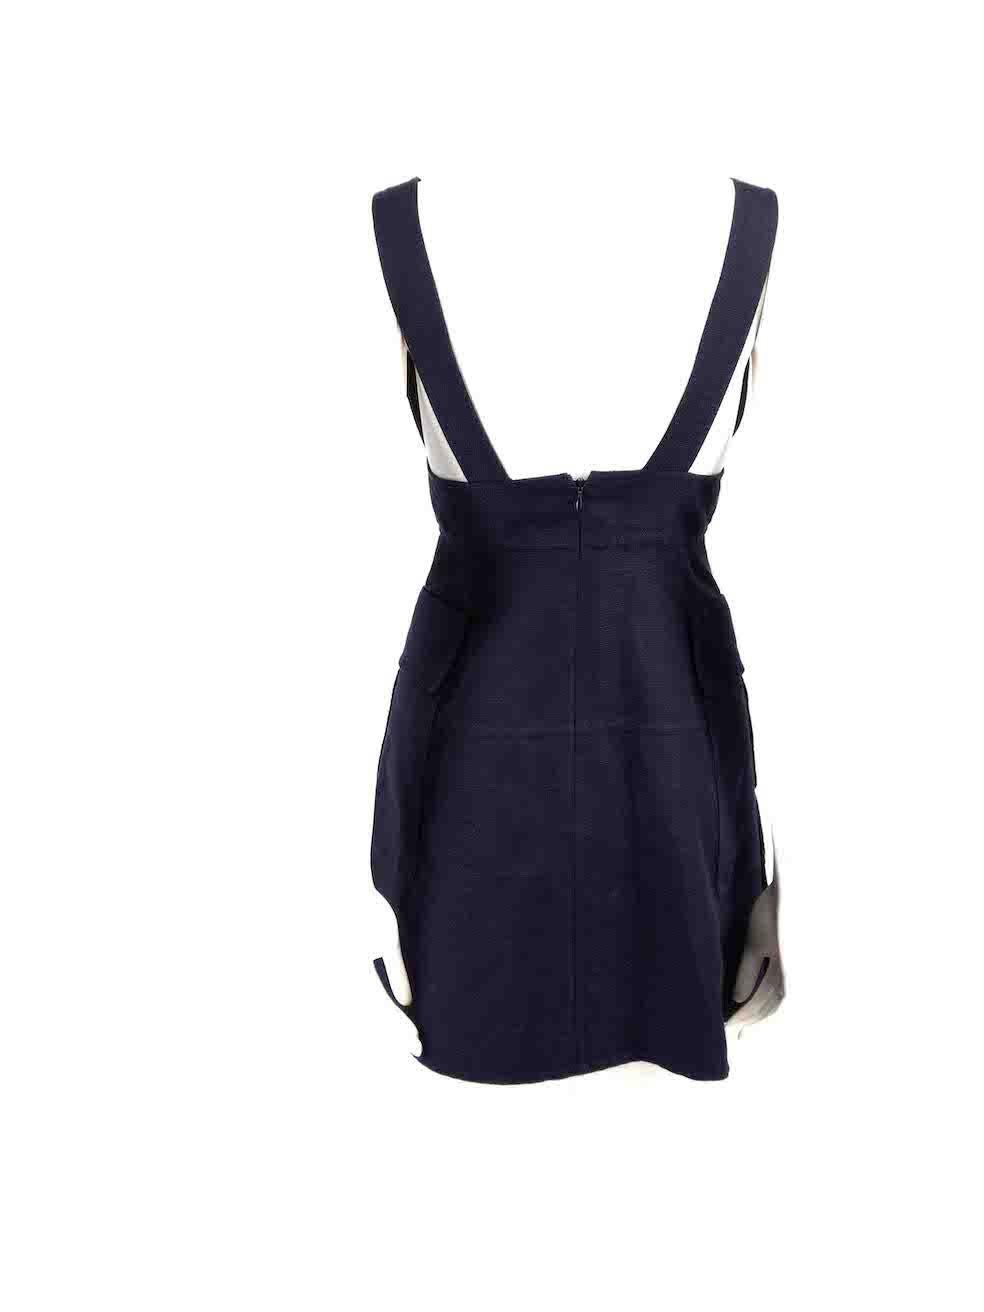 Valentino Garavani Navy Plunge Neck Mini Dress Size XS In Good Condition For Sale In London, GB